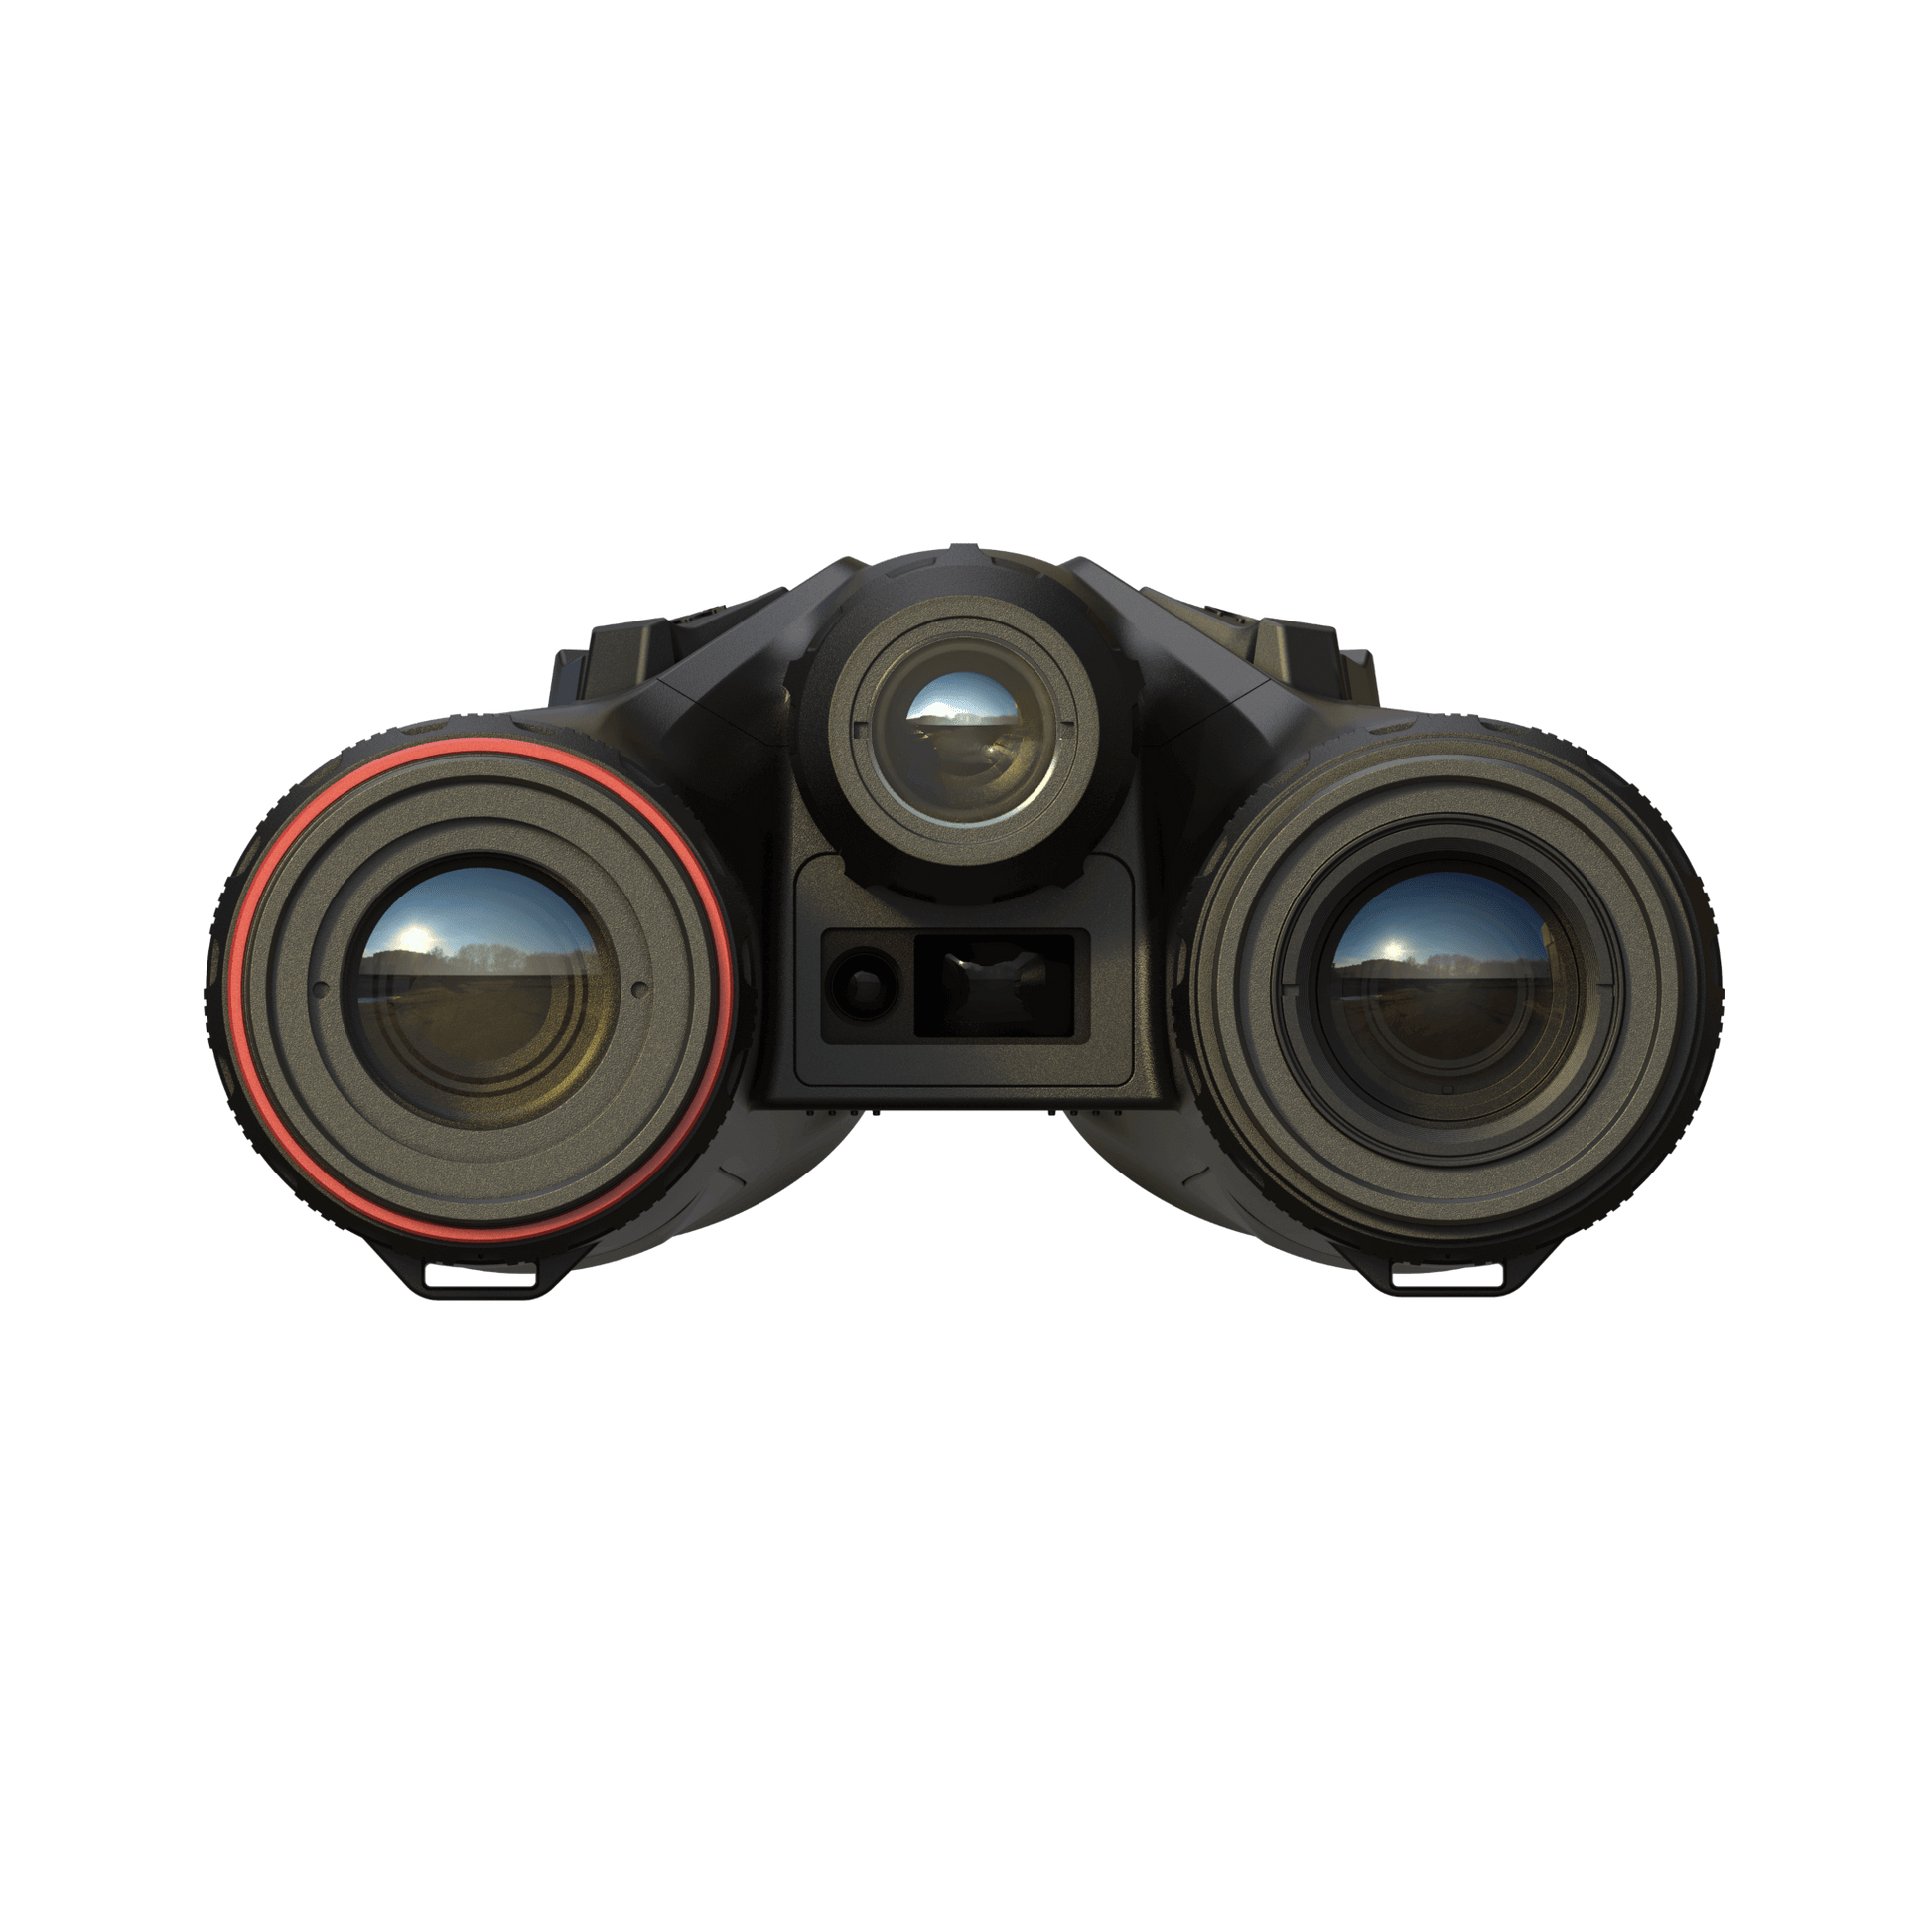 HikMicro Habrok HQ35L Multi-Function Night Vision Thermal Binoculars - Front View